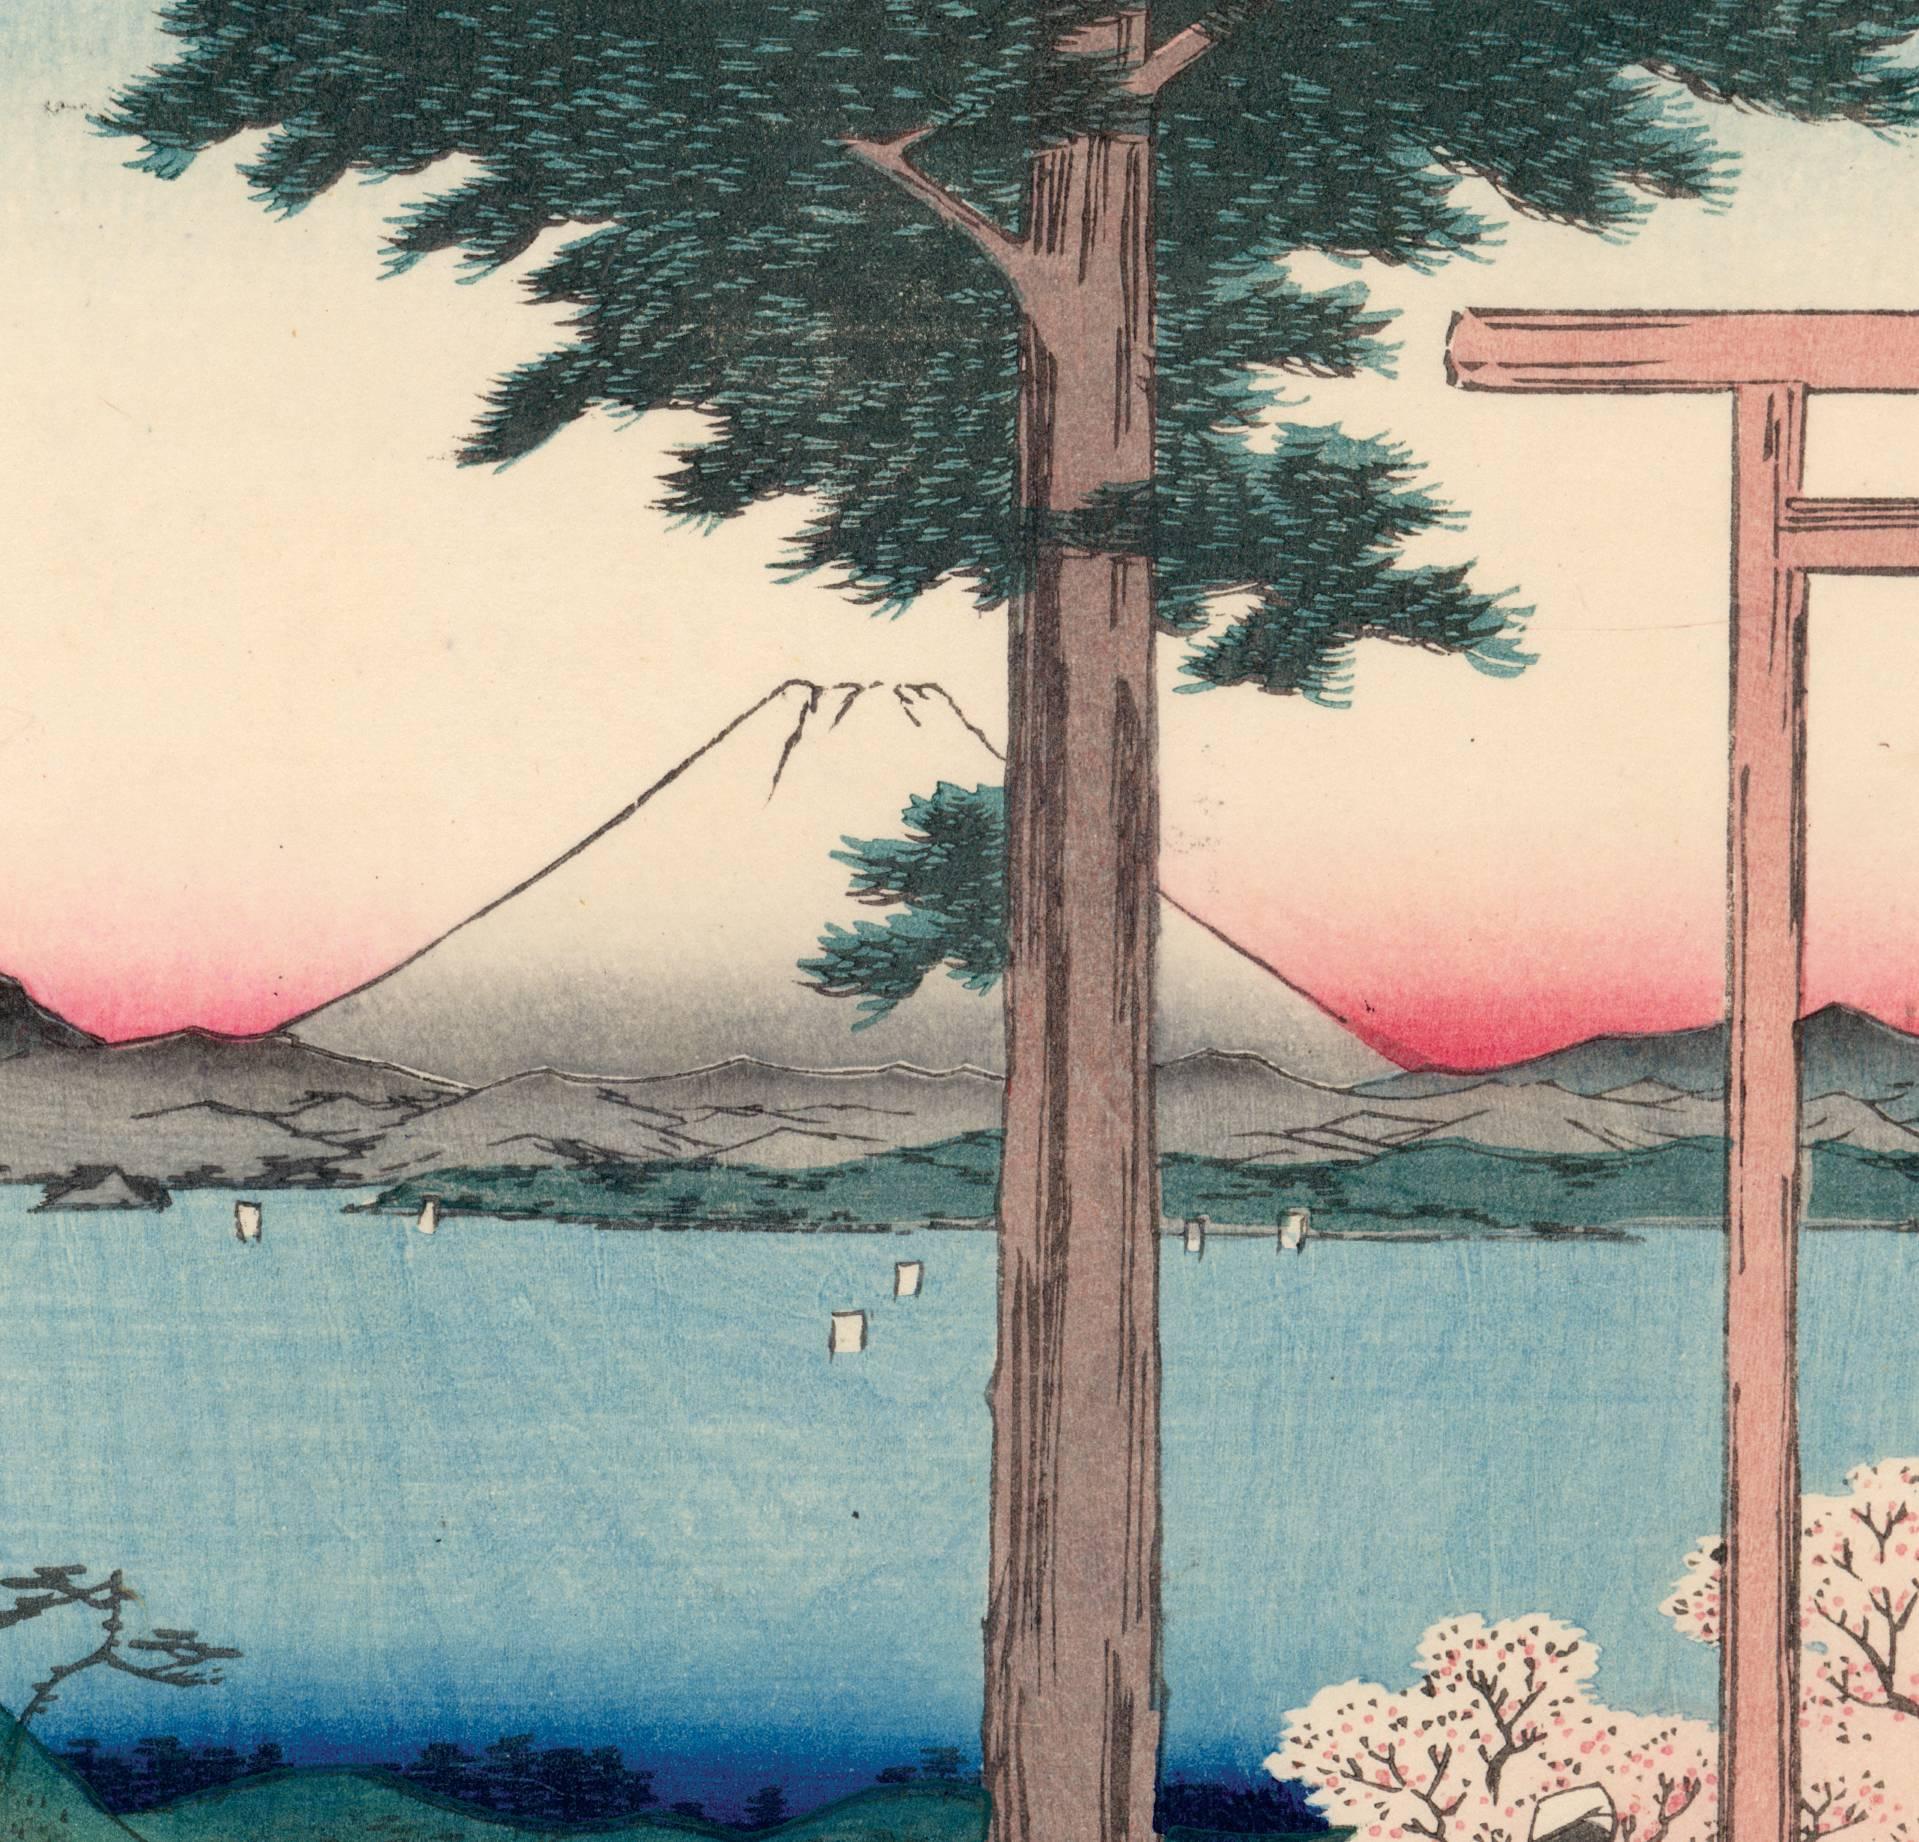 View of Mount Fuji with Cherry Blossoms - Print by Utagawa Hiroshige (Ando Hiroshige)